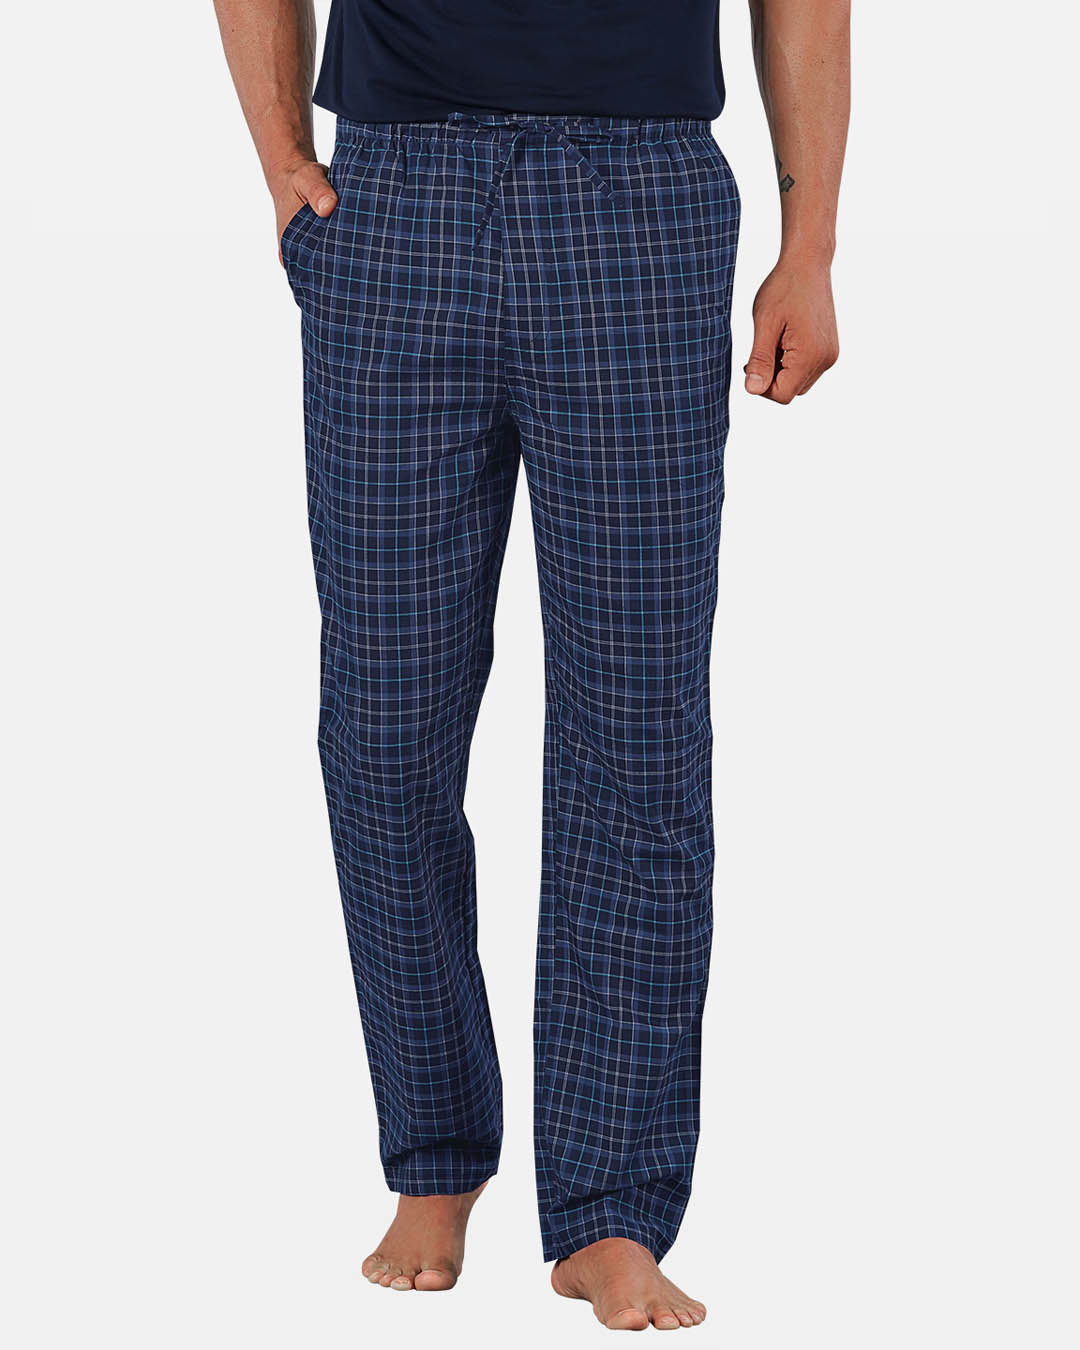 Shop Super Combed Cotton Checkered Pyjamas For Men-Back